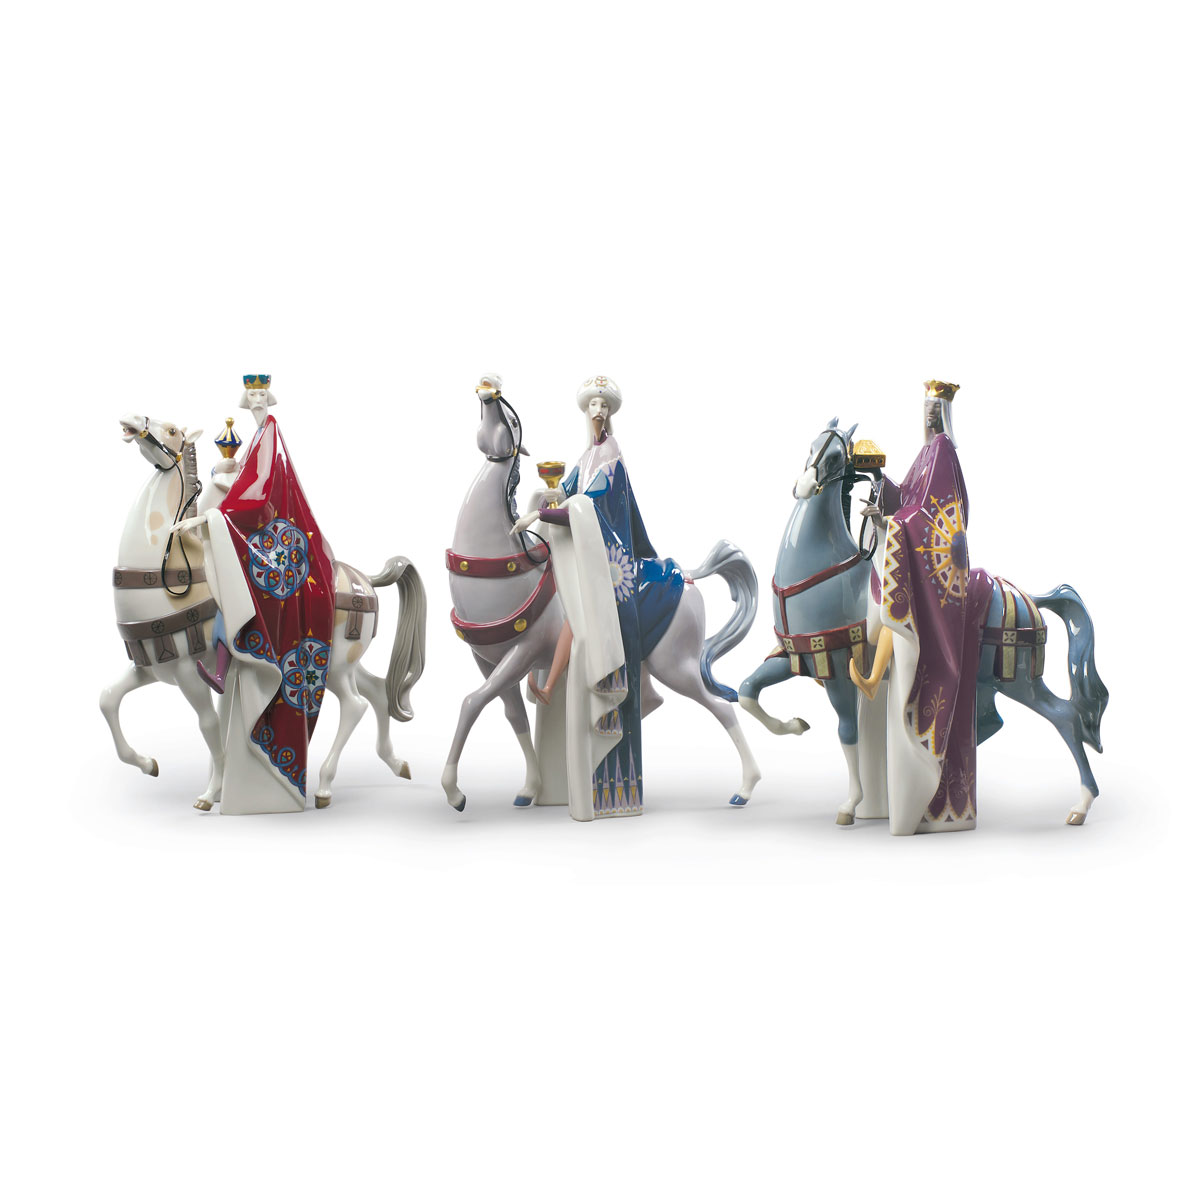 Lladro High Porcelain, Kings Melchior, Gaspar And Balthasar Sculpture. Limited Edition